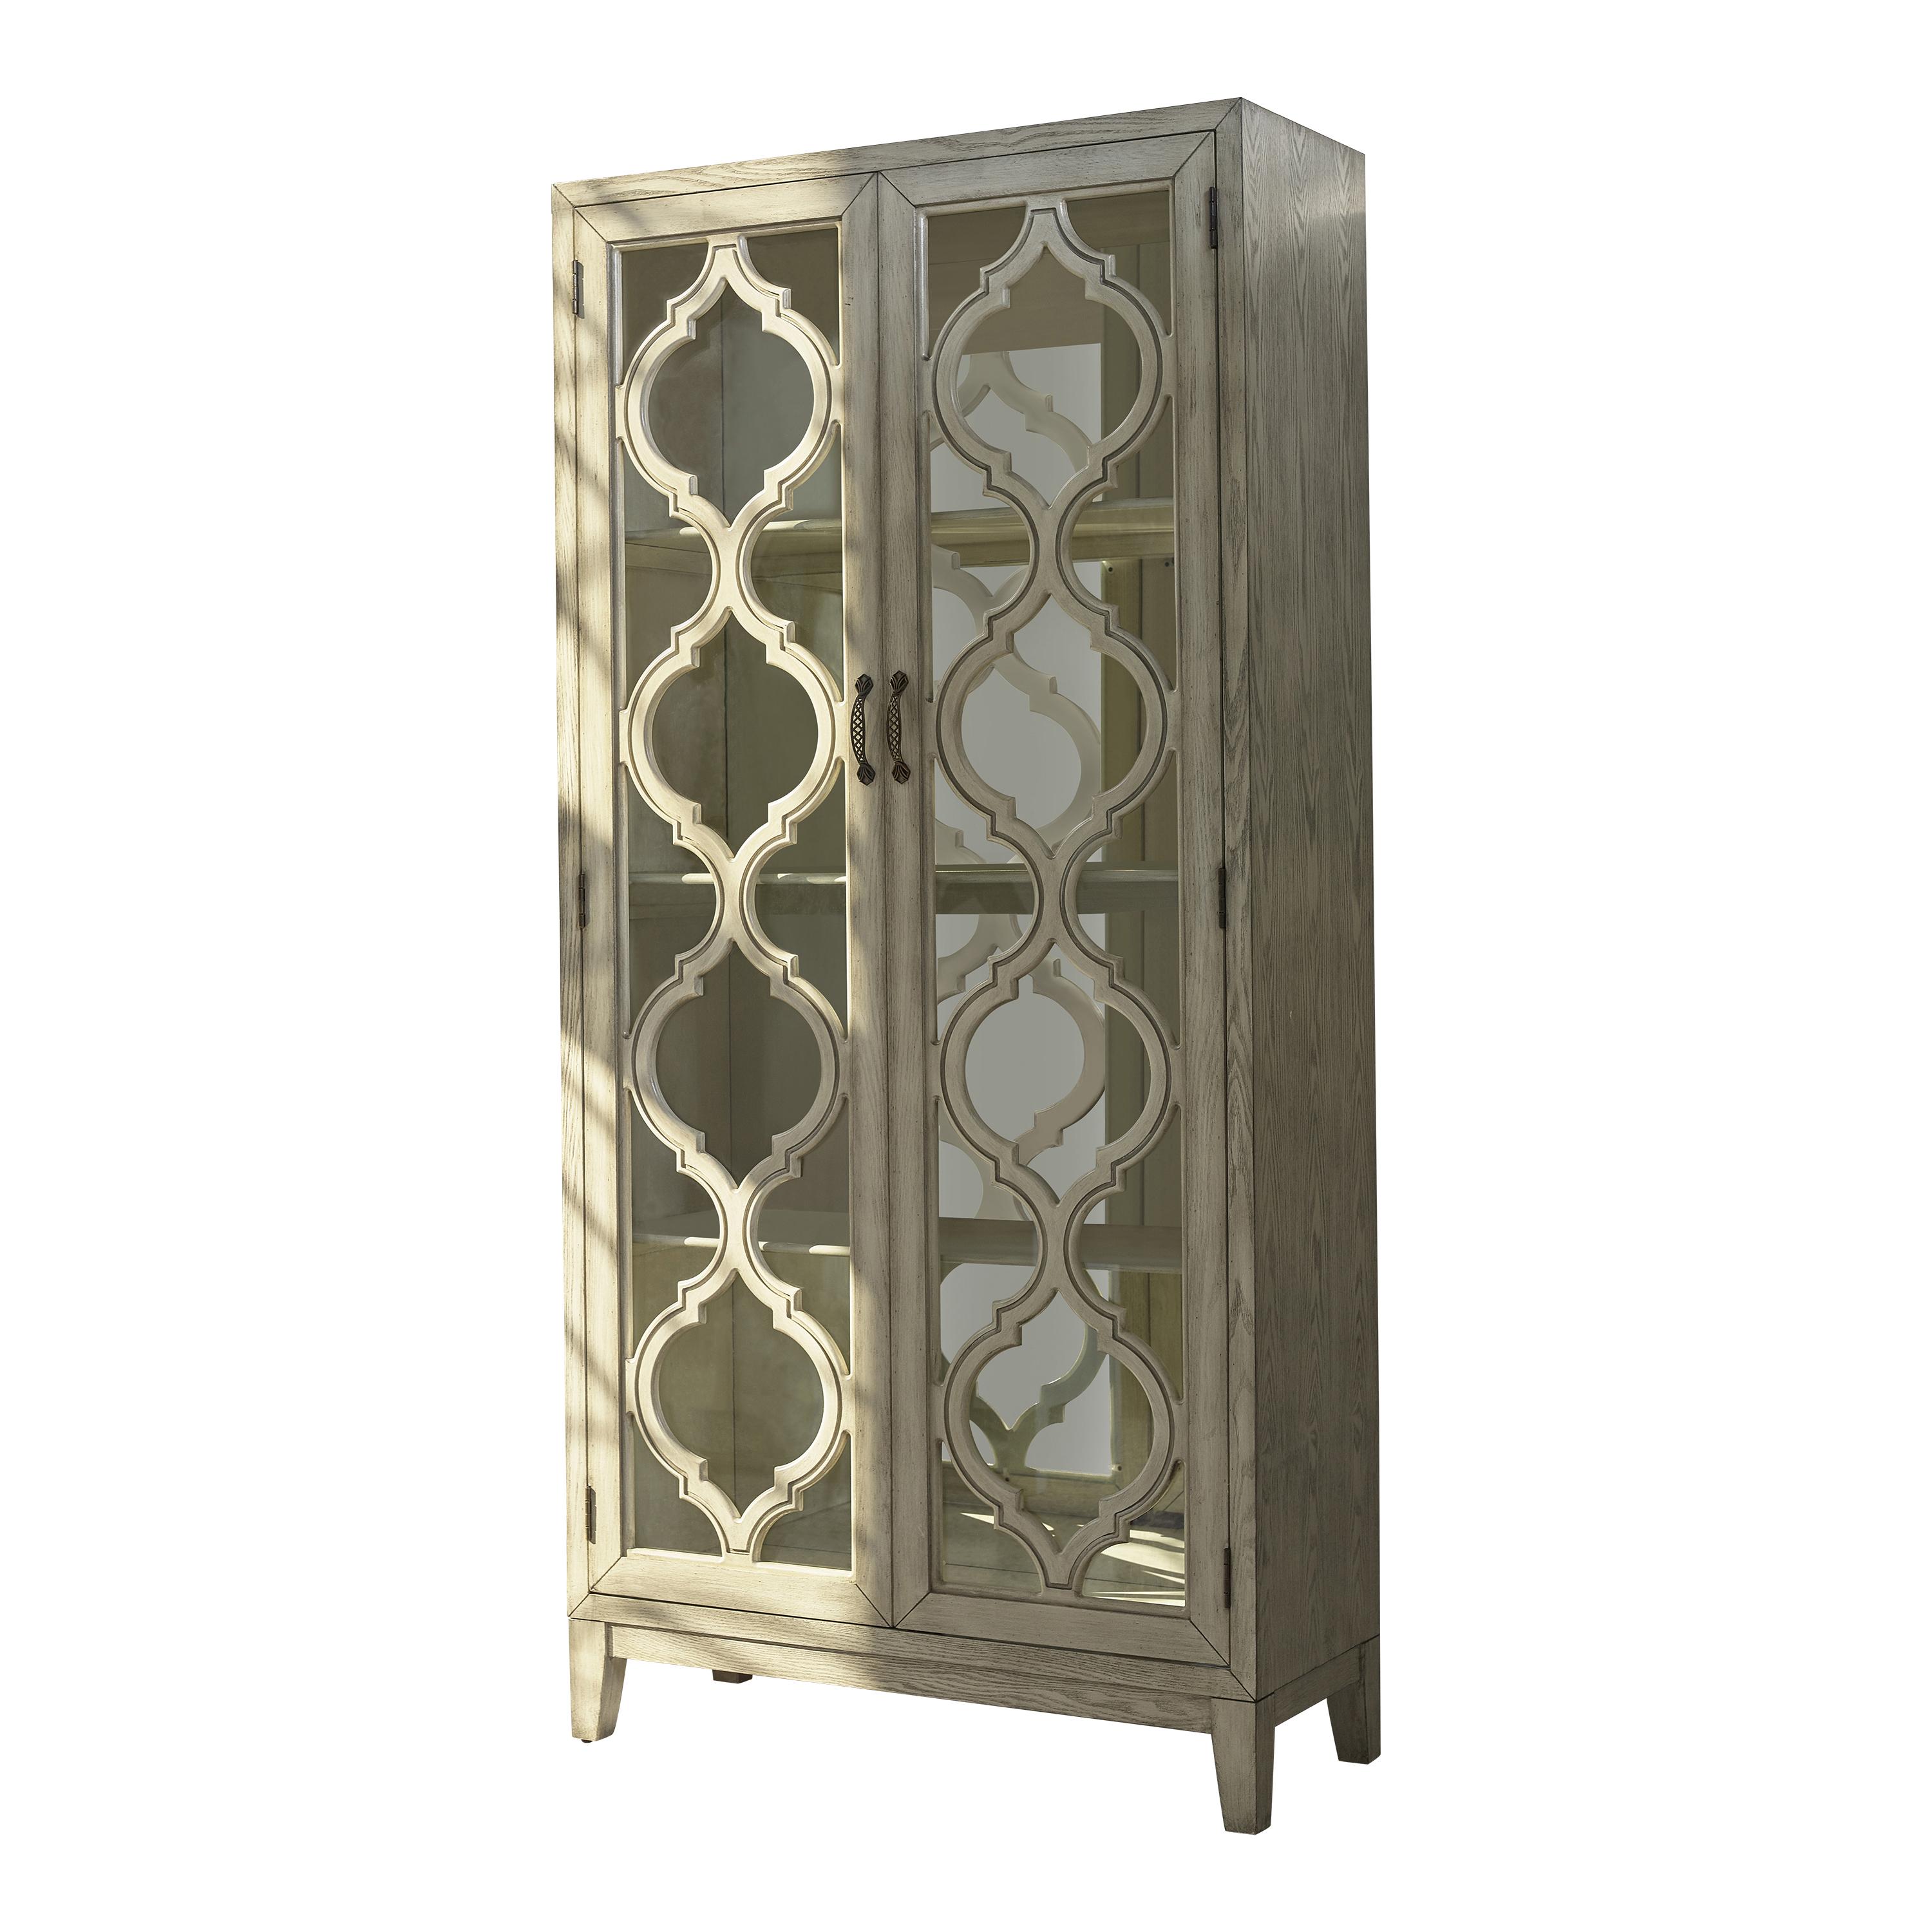 Vintage Curio Cabinet 953375 953375 in Antique White 